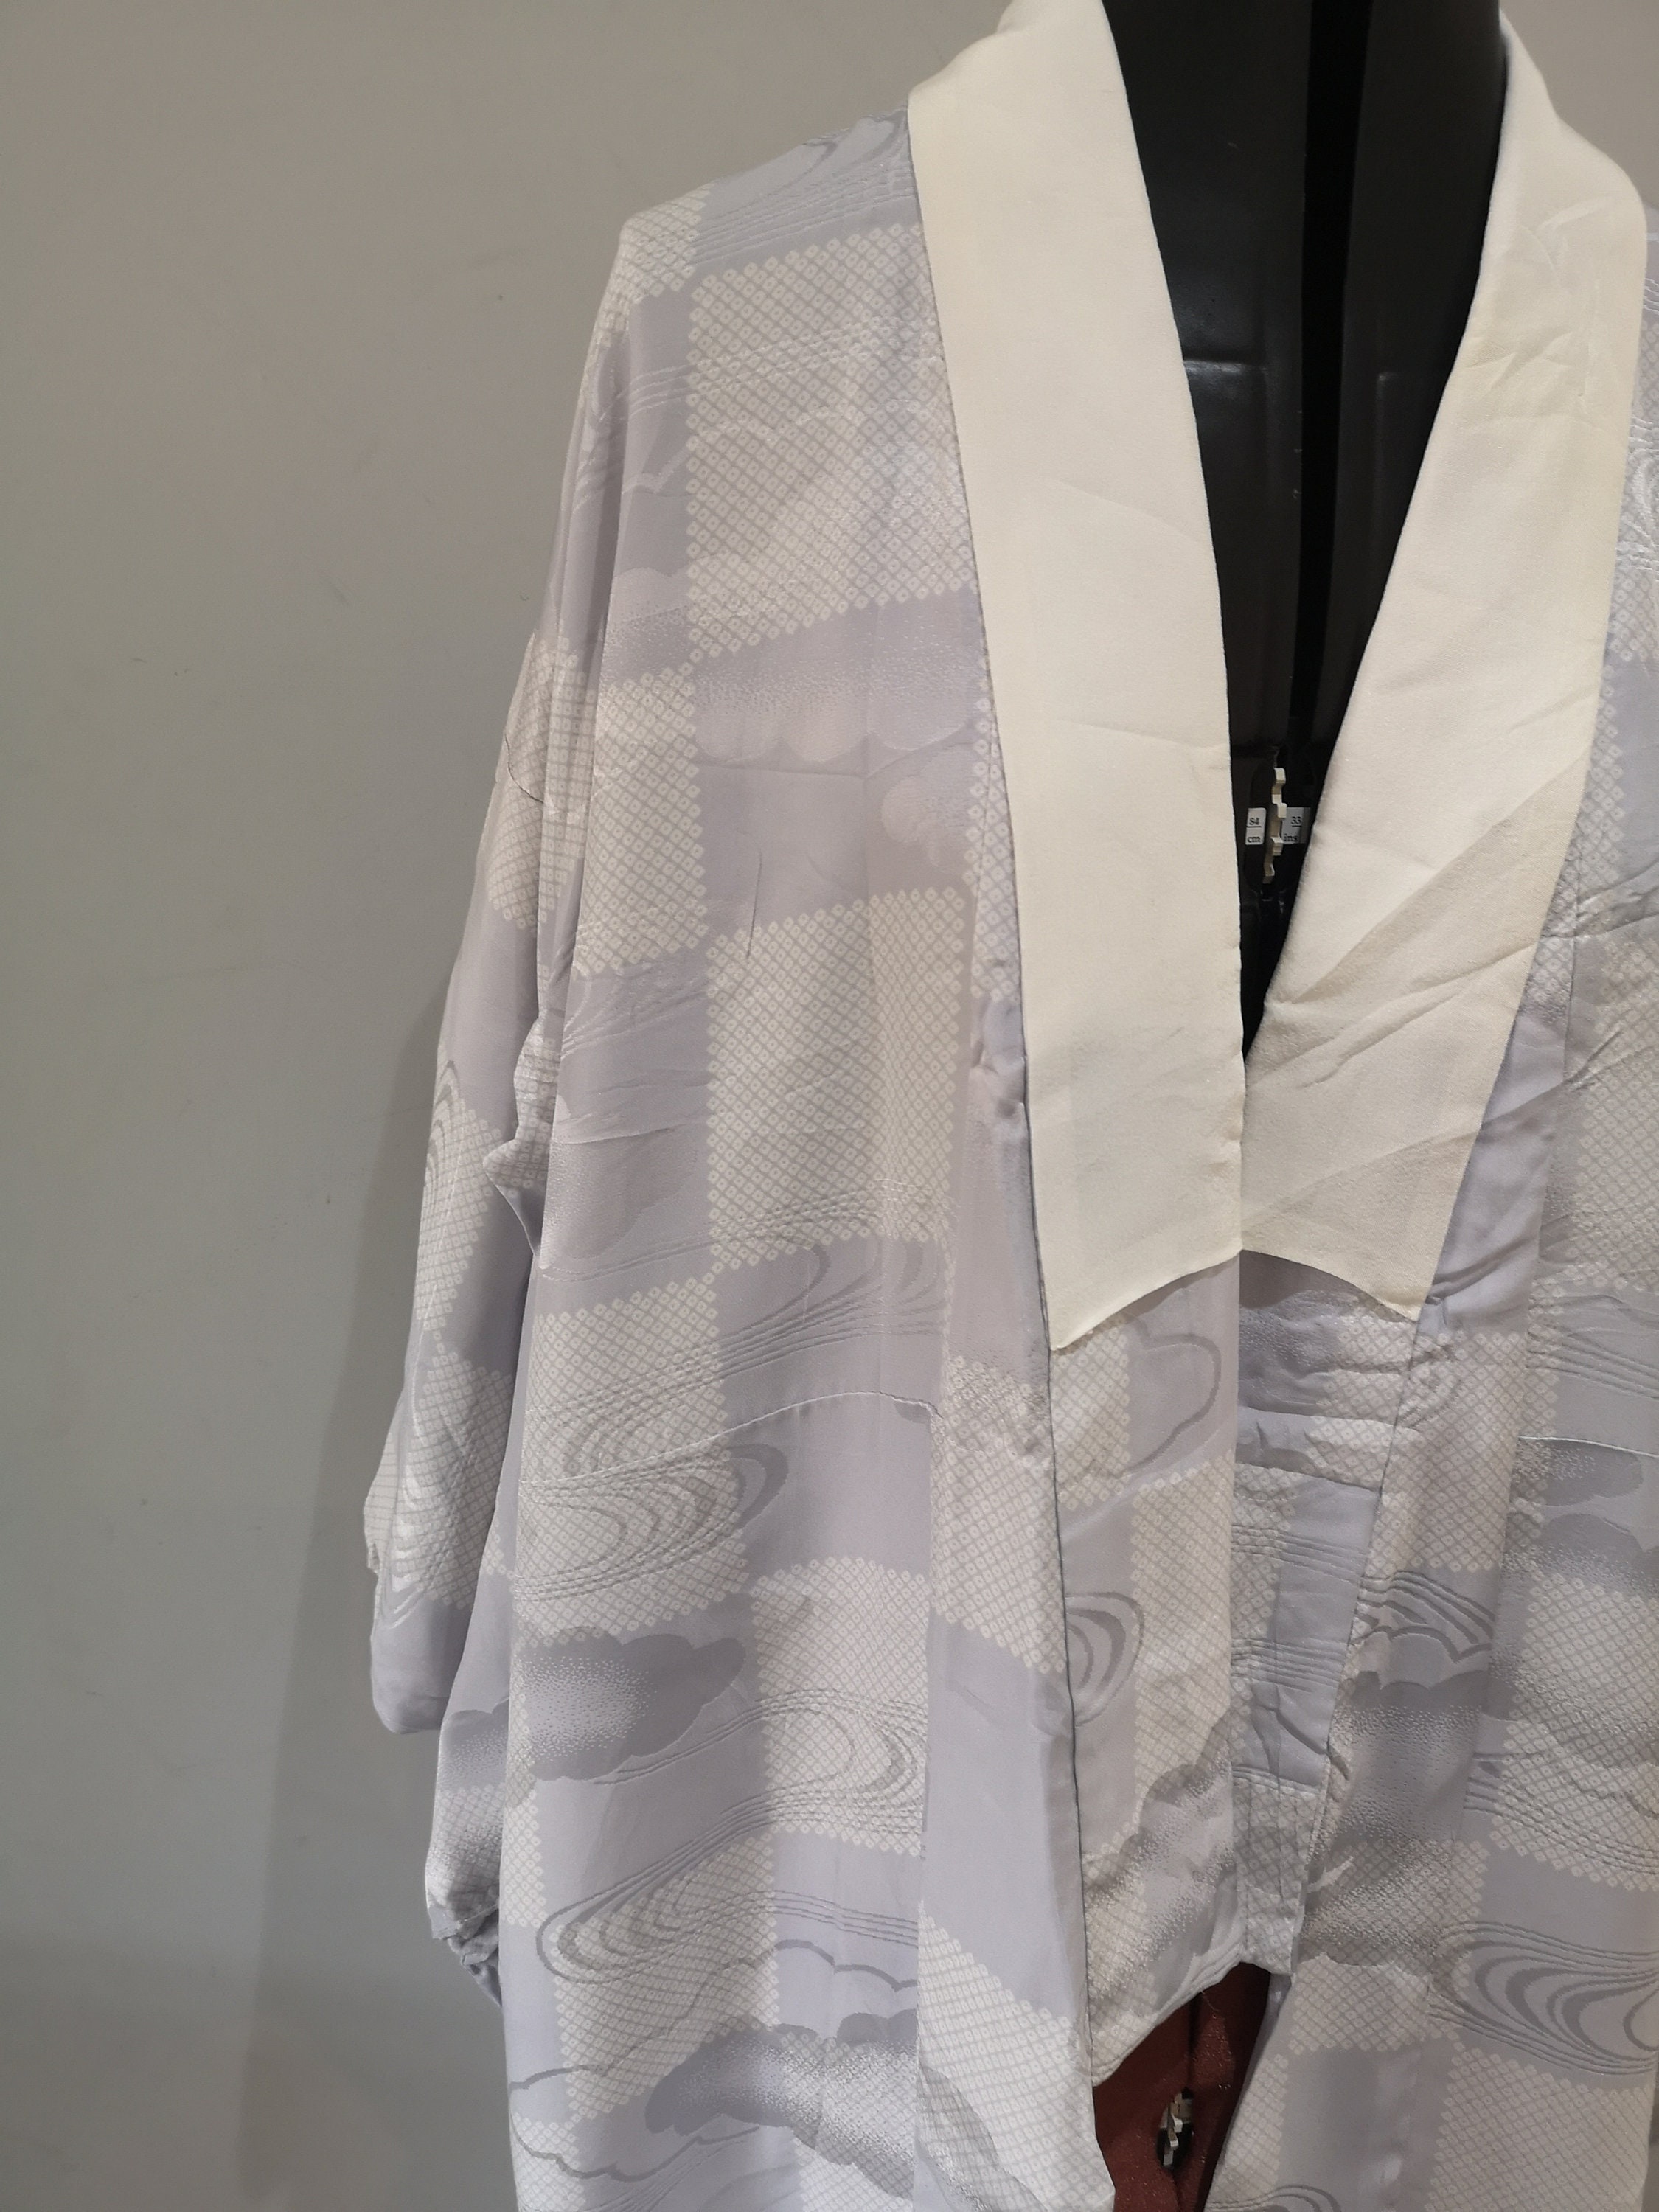 jacket dressing gown geometric pattern Vintage Japanese Kimomo Robe lightweight silky kimono One Size.